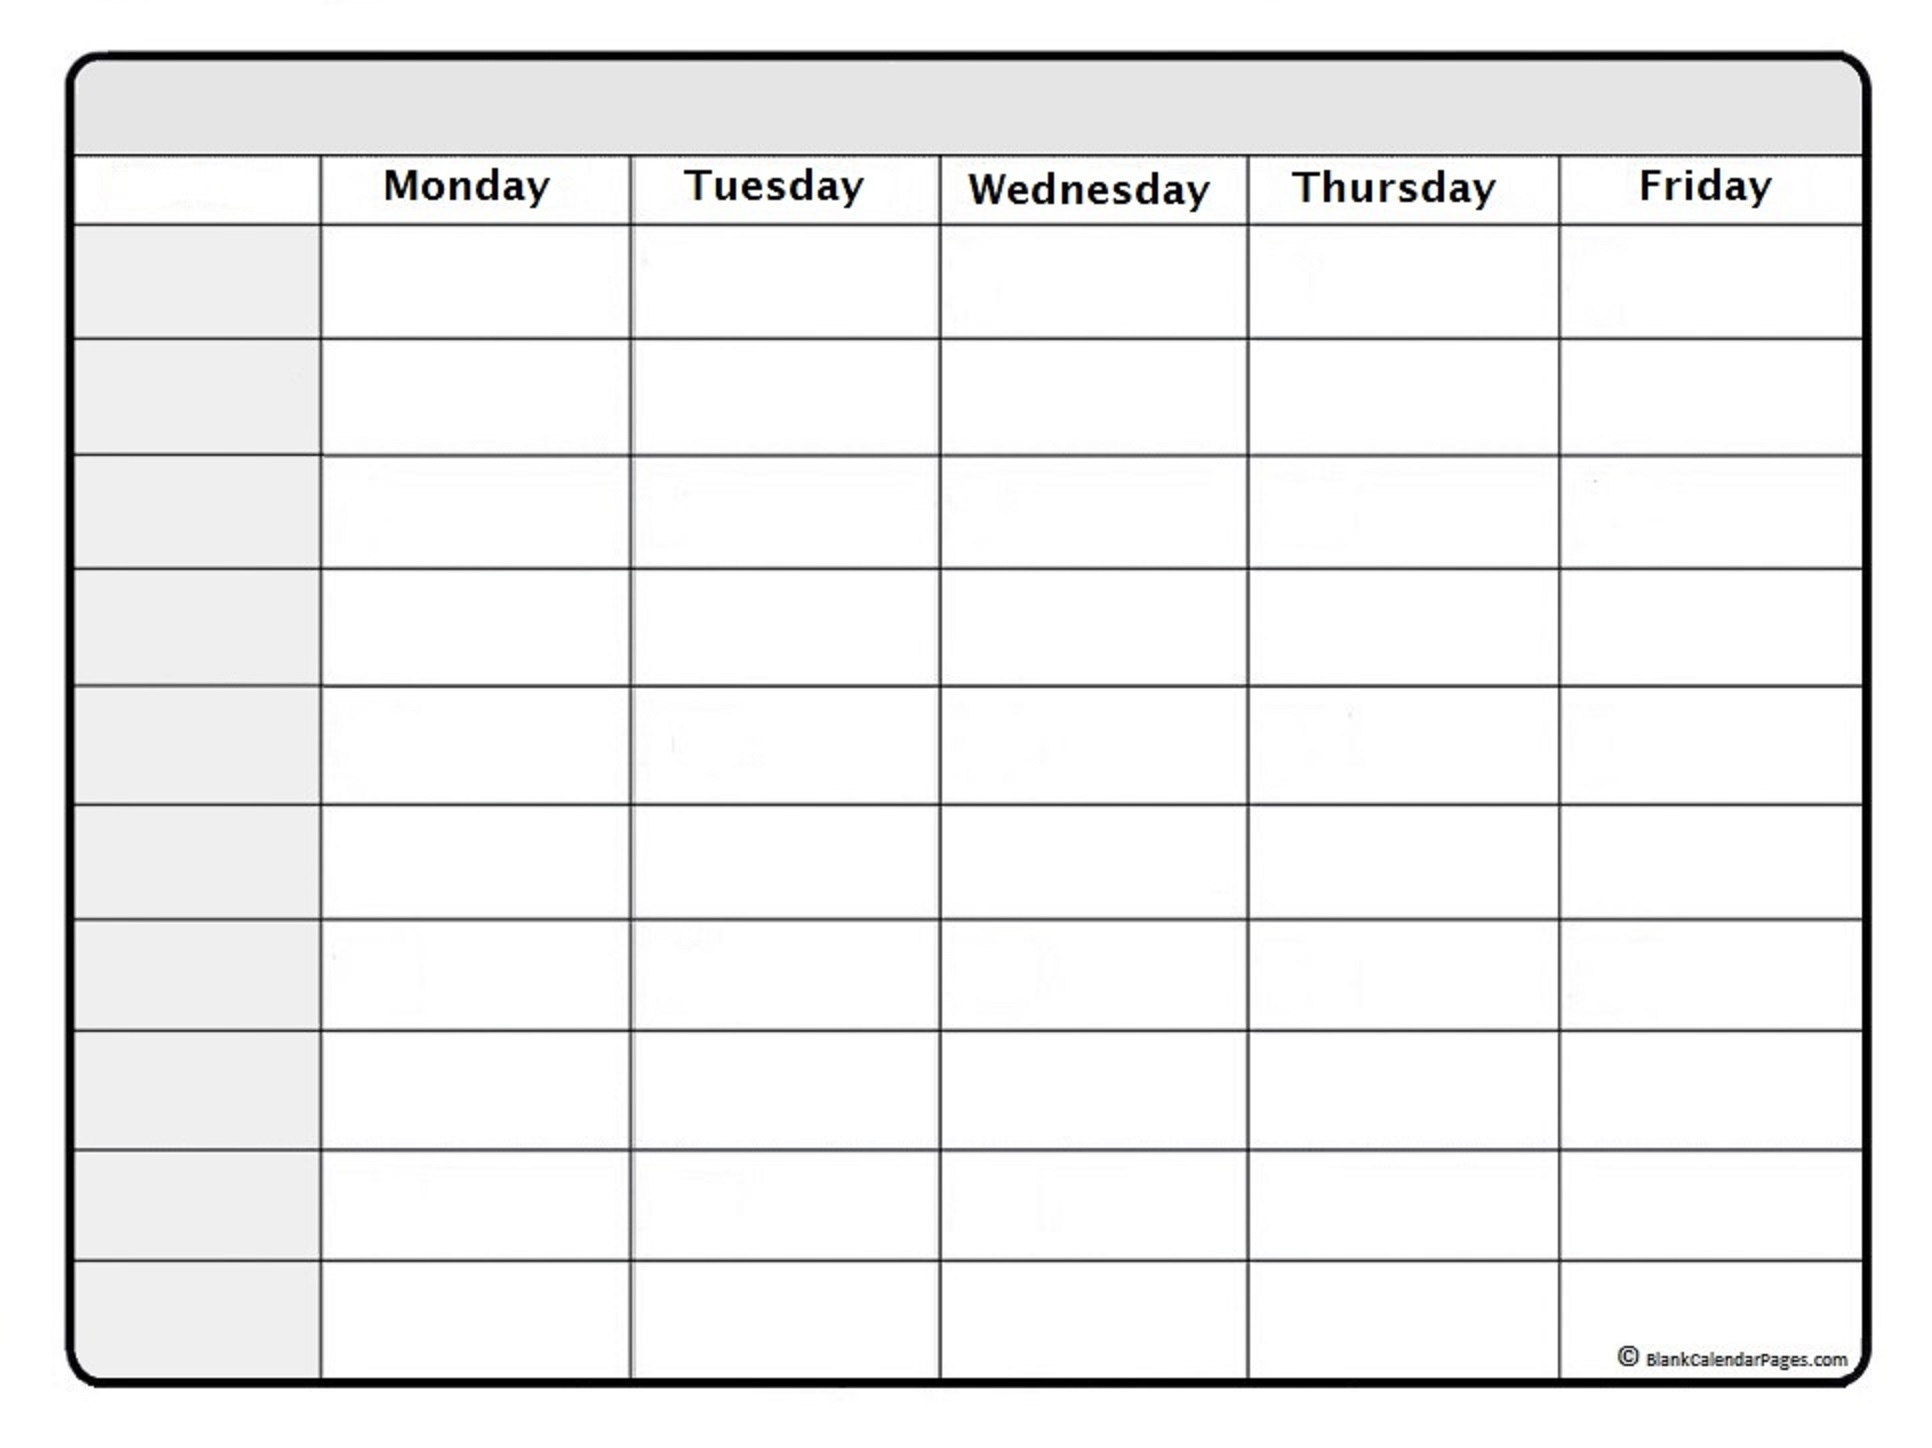 February 2021 Weekly Calendar | February 2021 Weekly Free 7 Day Calendar Printable Template